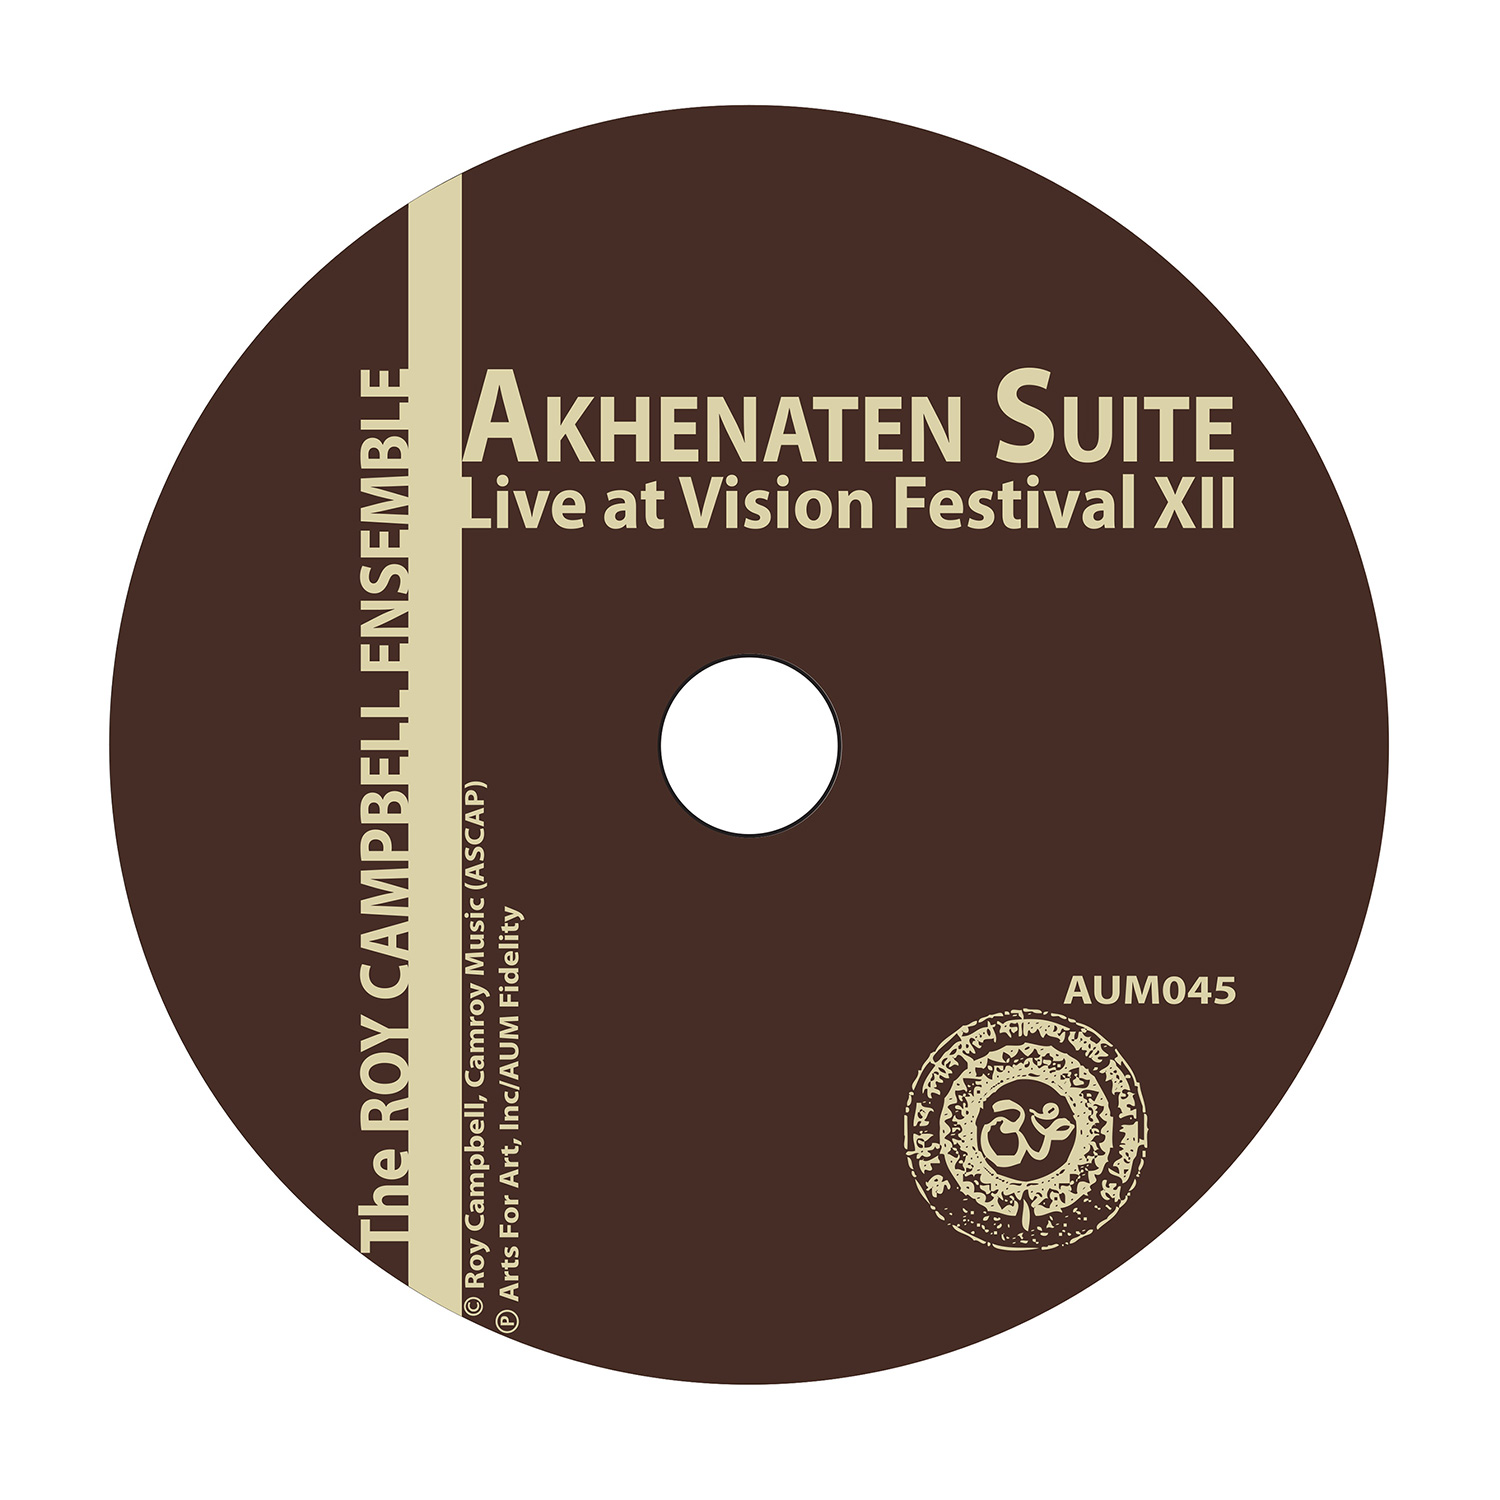 cd art for Roy Campbell Ensemble's cd Akhenaten Suite Live at Vision Festival 18